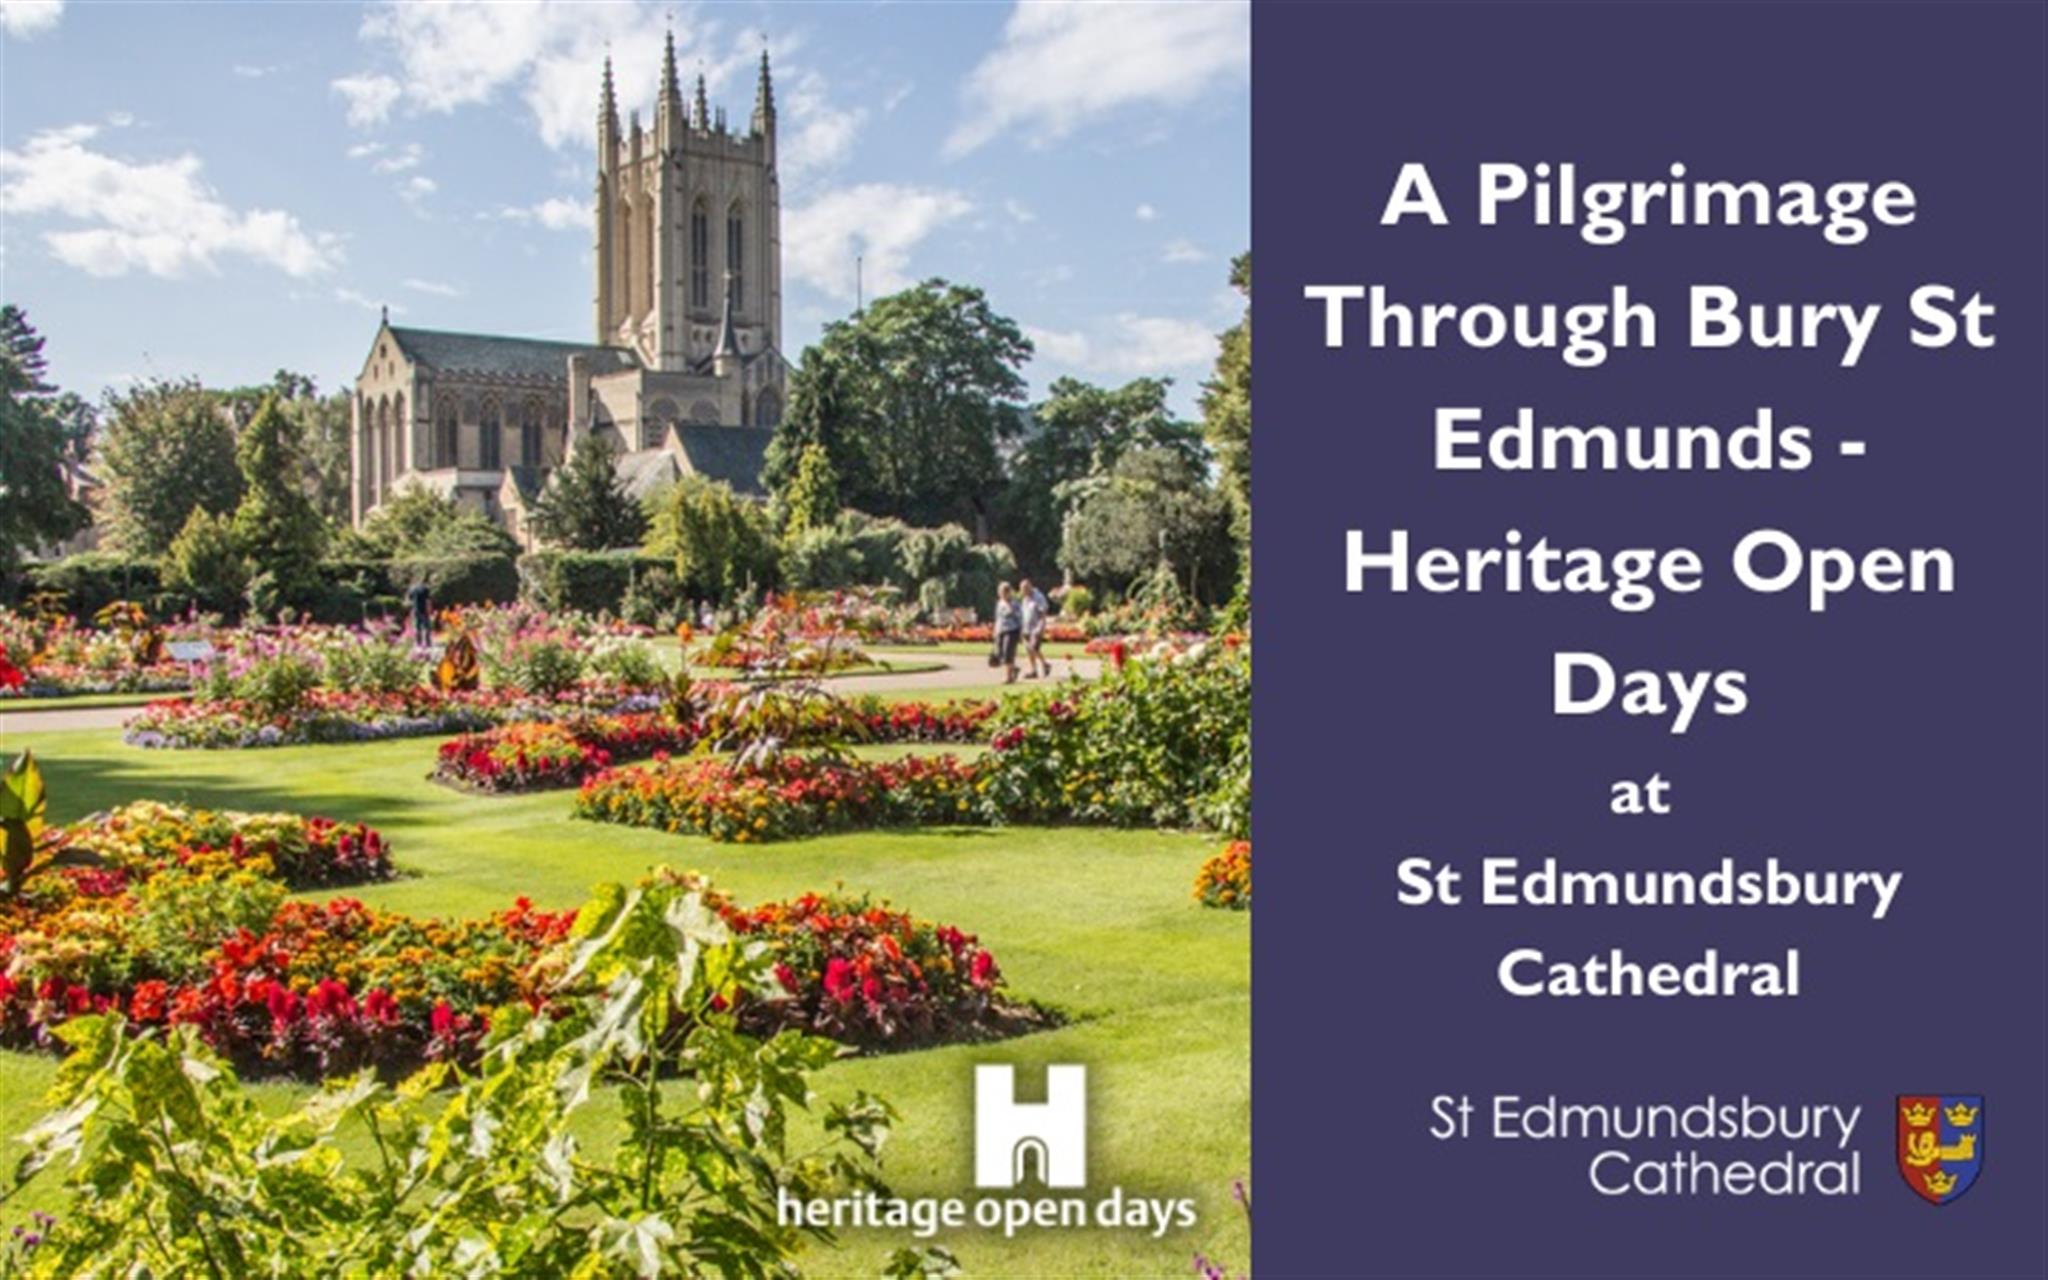 A Pilgrimage through Bury St Edmunds – Heritage Open Days image